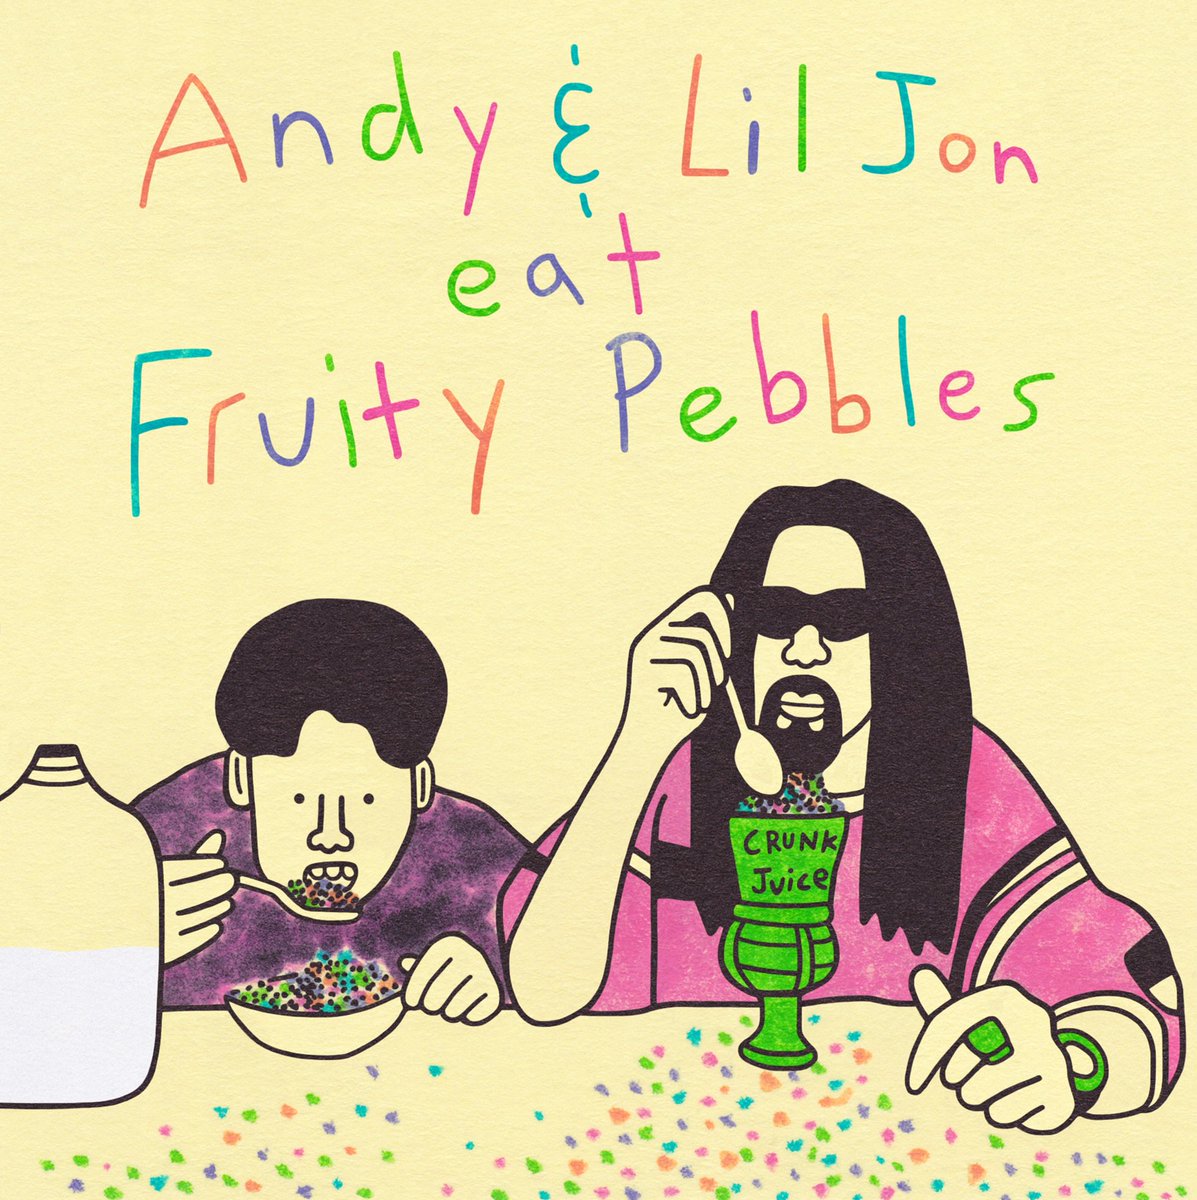 RT @gangsterdoodles: Andy & Lil Jon eat Fruity Pebbles @AndyMilonakis @LilJon #fruitypebbles https://t.co/4tv0JZVpKc